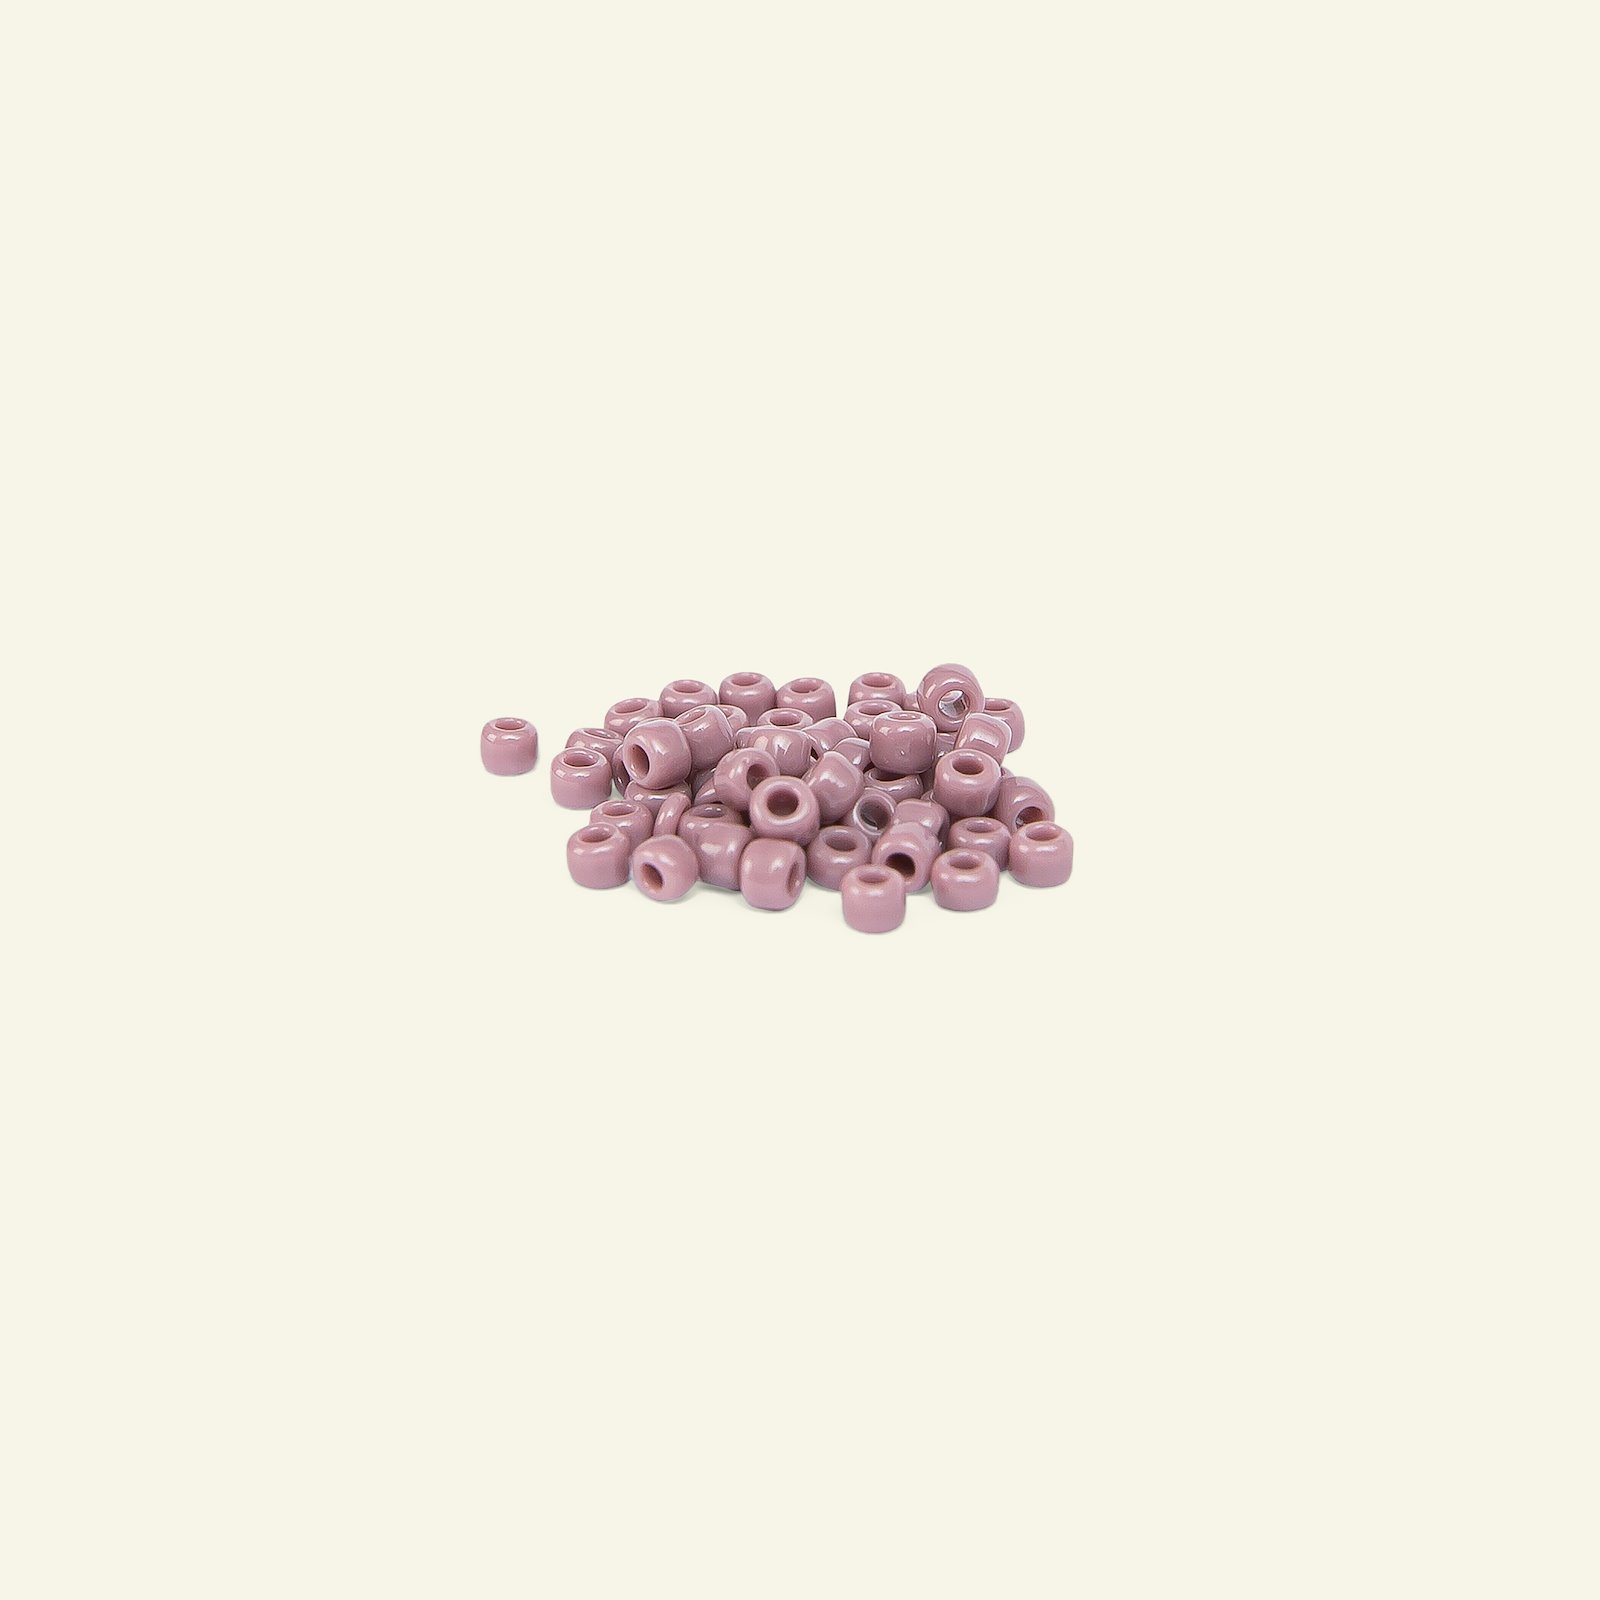 Matsuno glaspärla 8/0 lavendel 10g 47109_pack_b